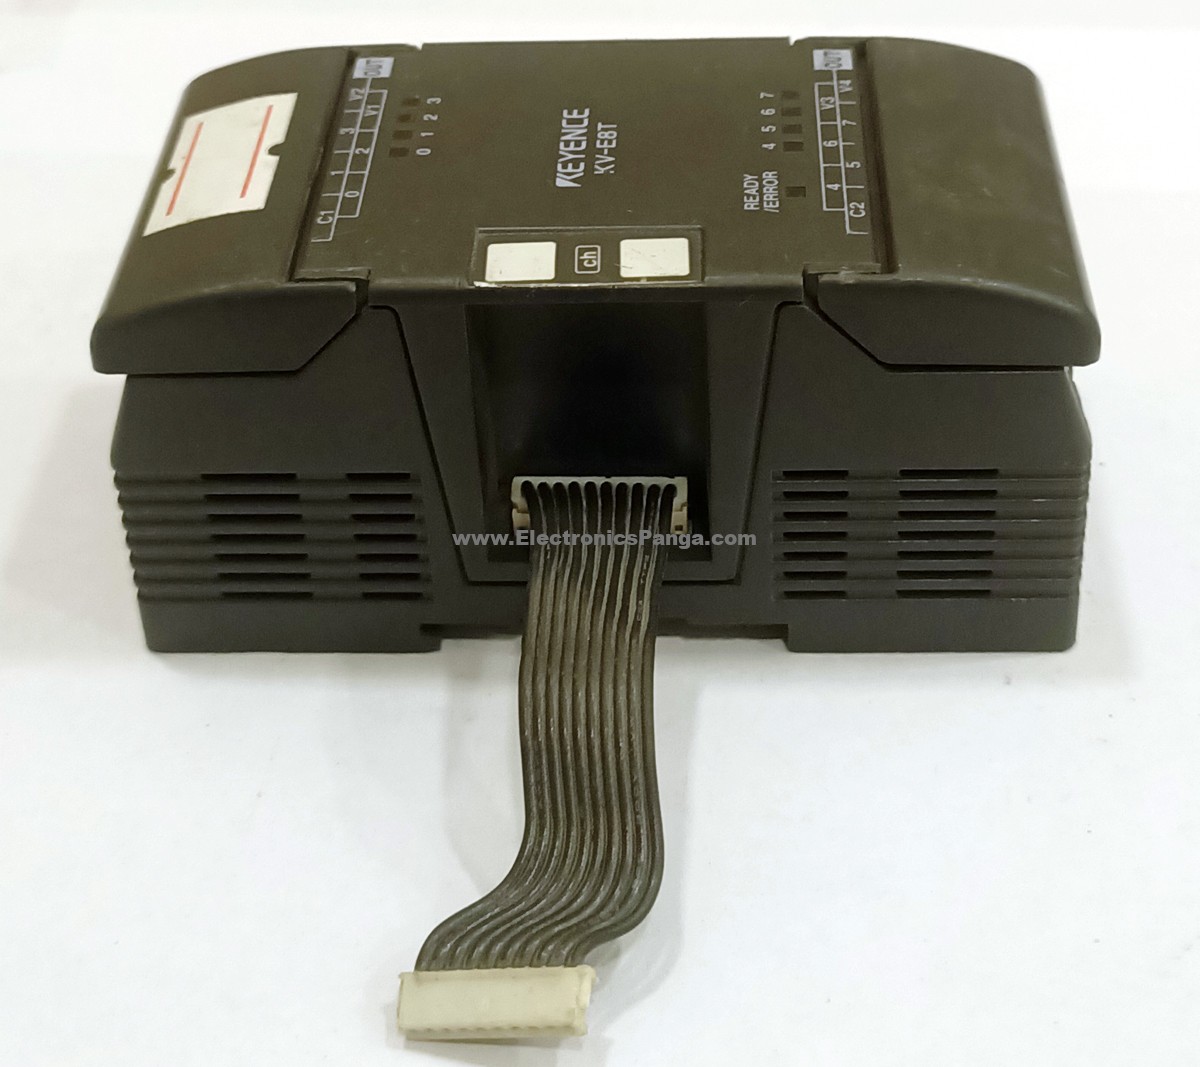 KEYENCE KV-E8T Super-small Programmable Logic Controller (PLC) PL84 – Star  International